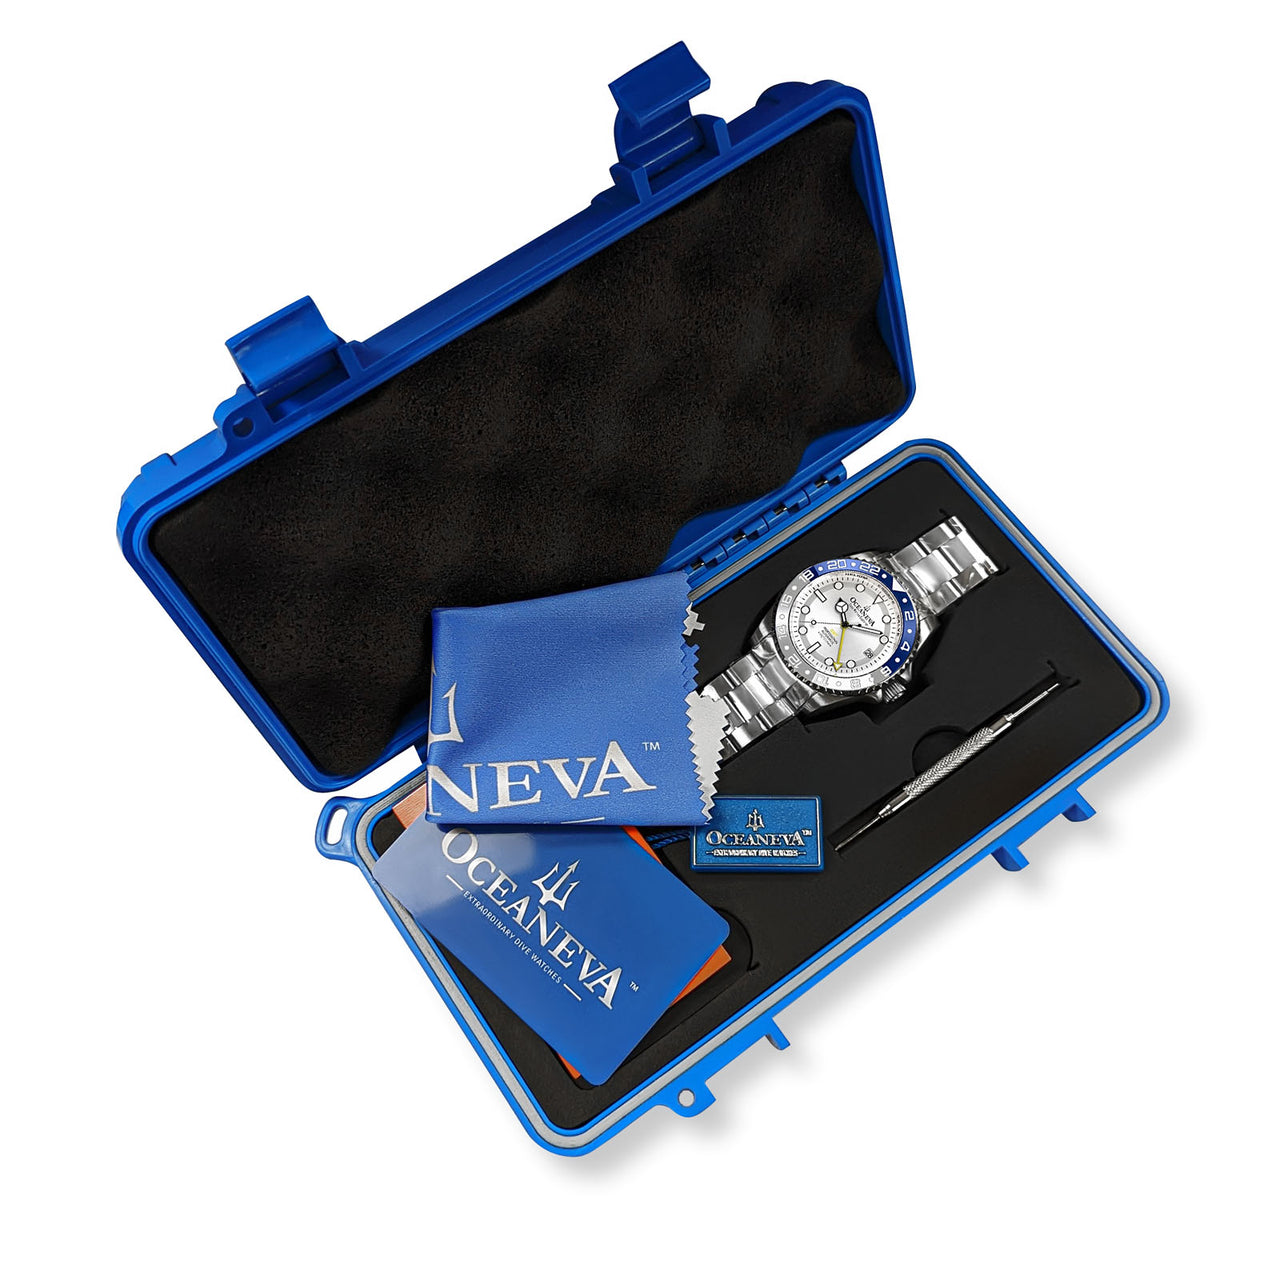 Oceaneva™ Men's GMT Automatic Deep Marine Explorer 1250M Pro Diver Silver Dial Watch